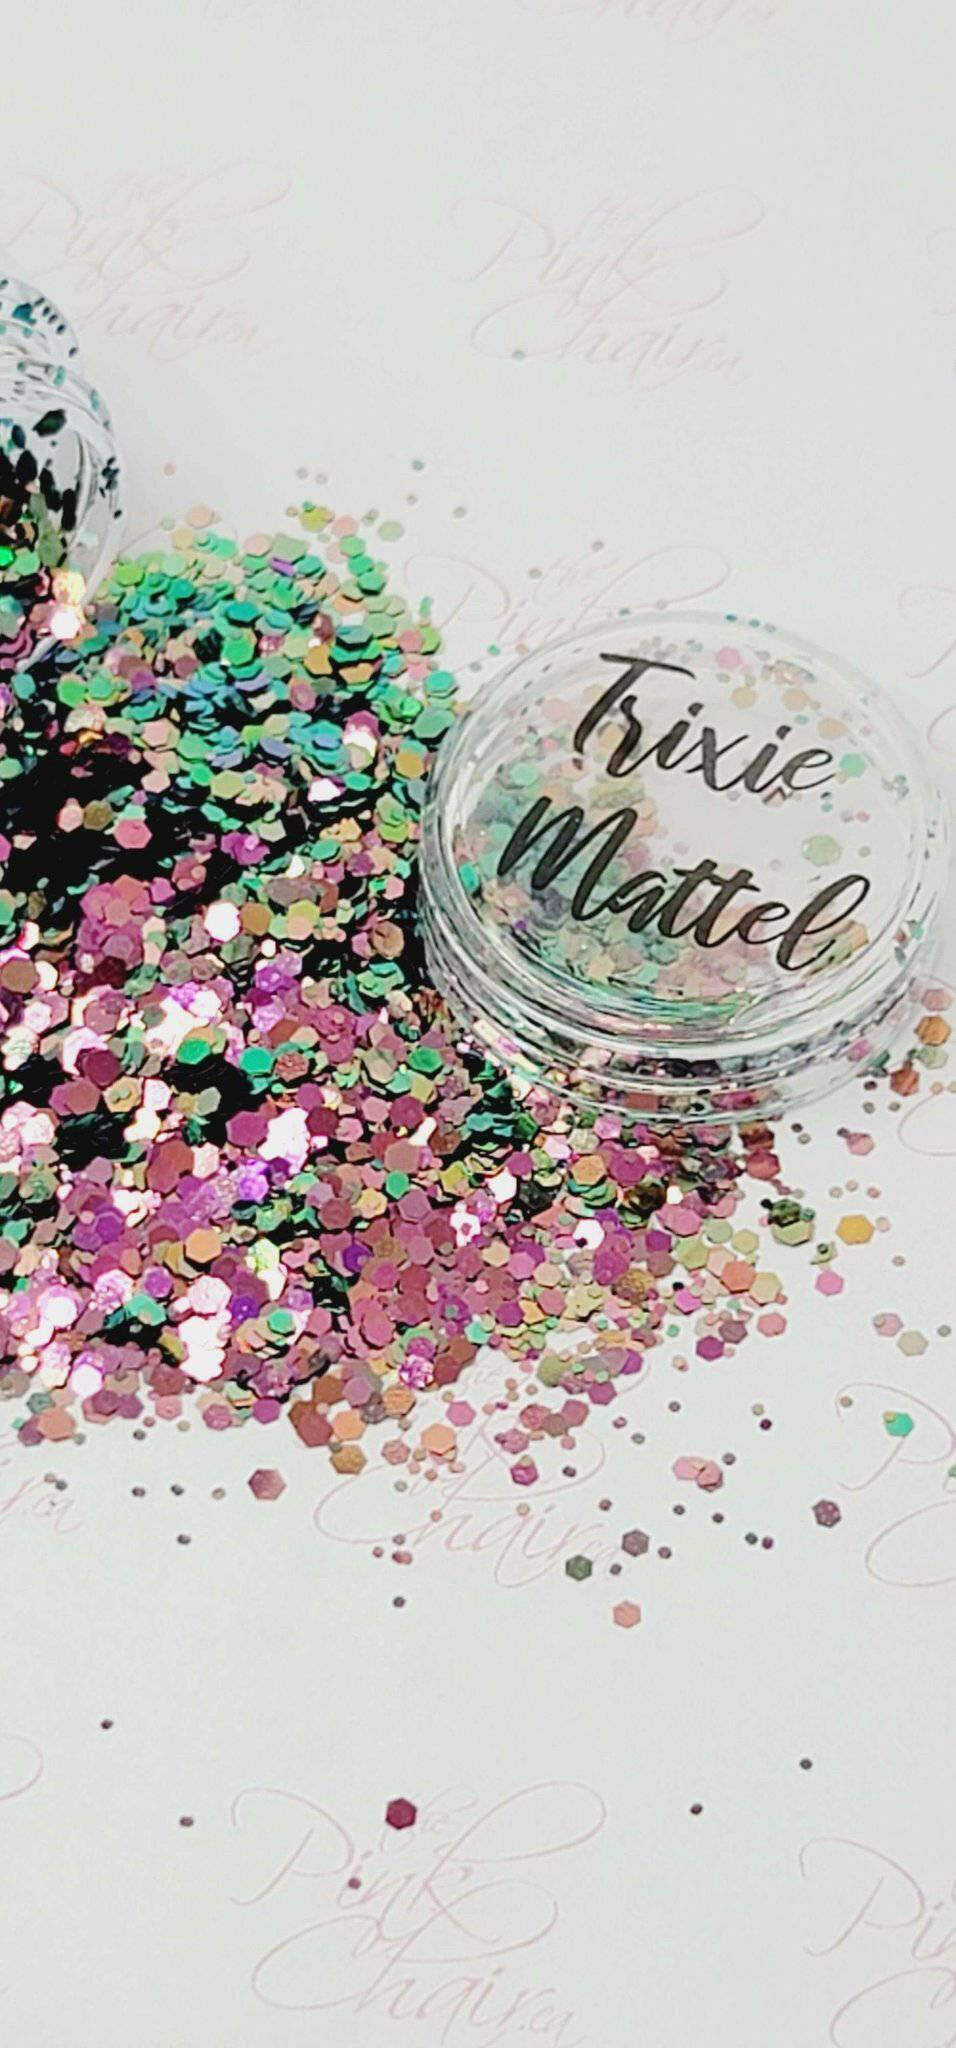 Trixie Mattel, Glitter (411) - thePINKchair.ca - Glitter - thePINKchair nail studio